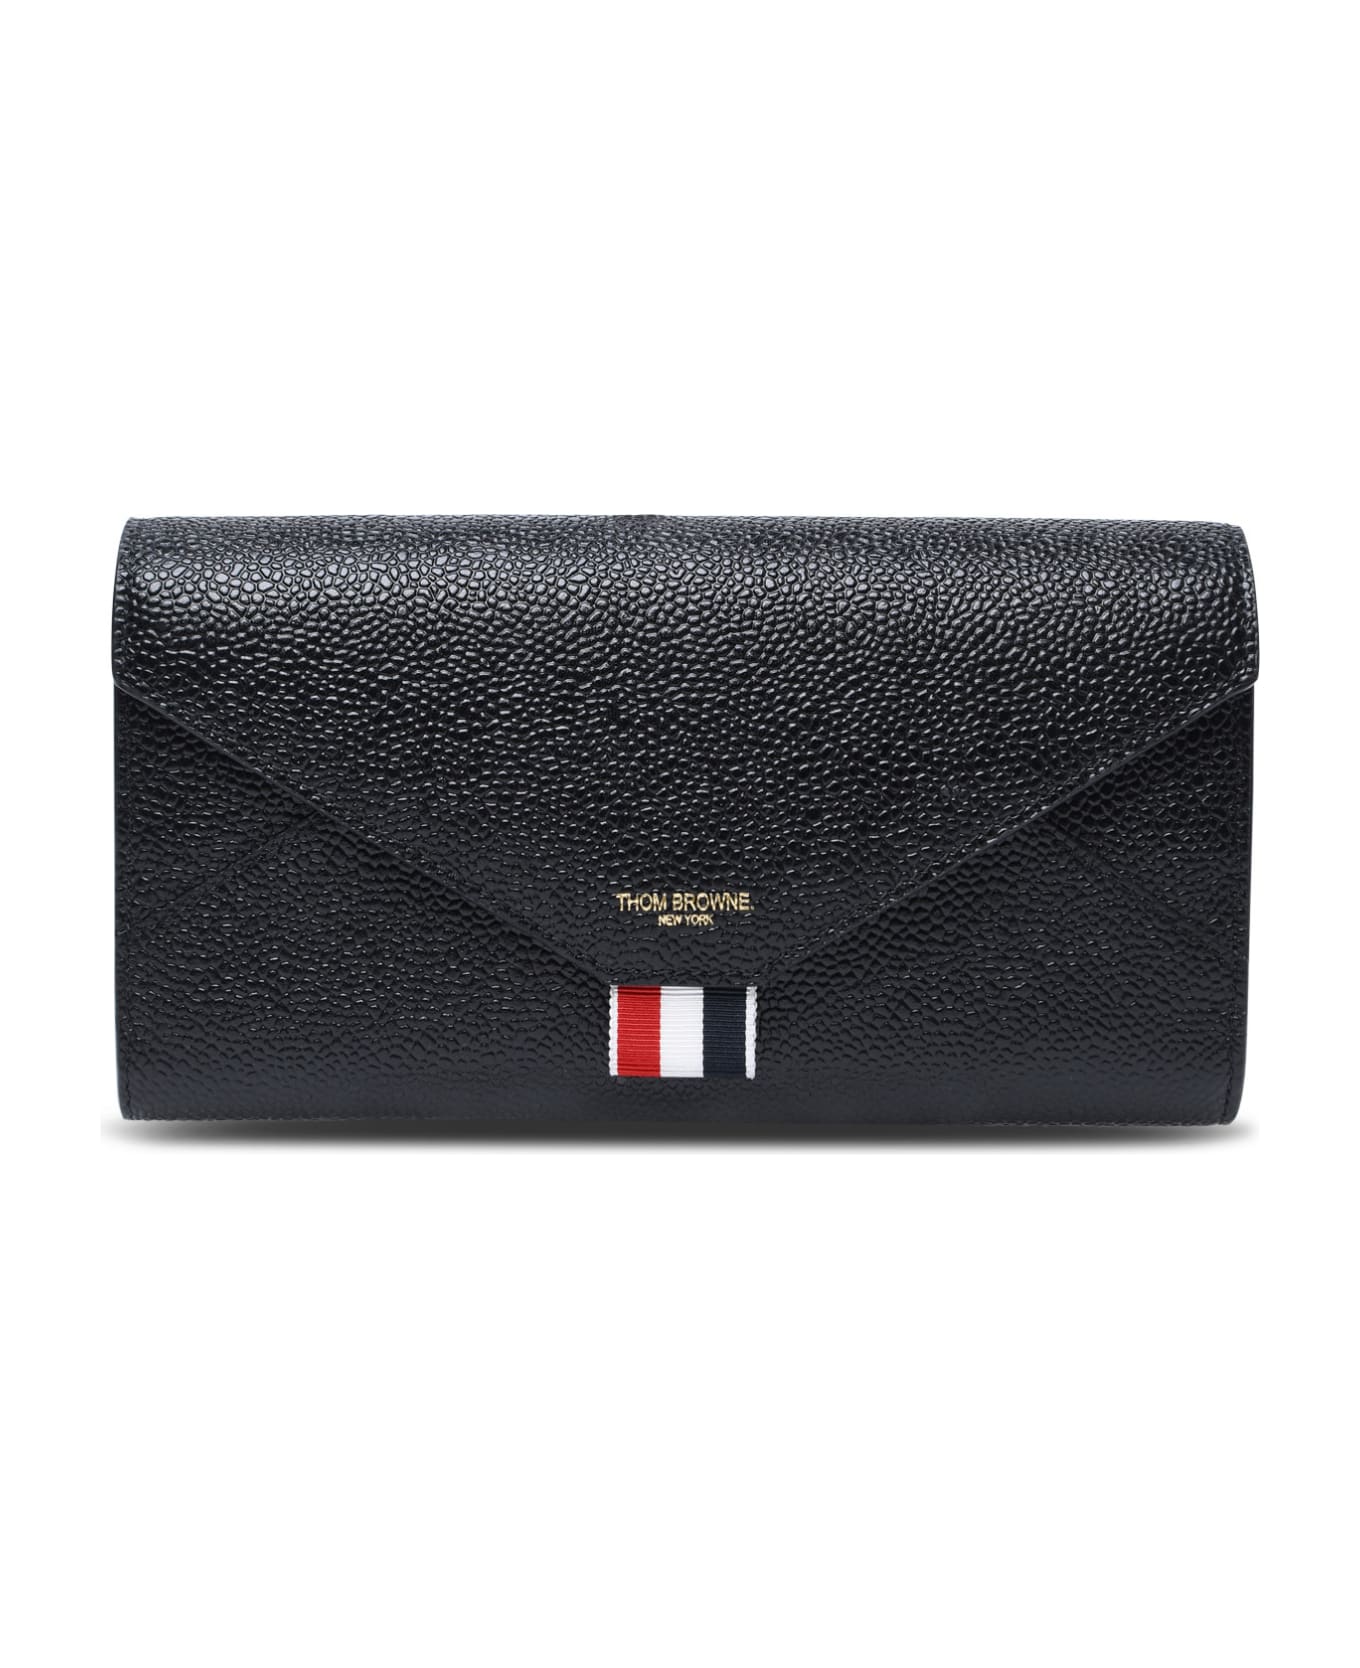 Thom Browne Black Grained Leather Wallet - Black 財布